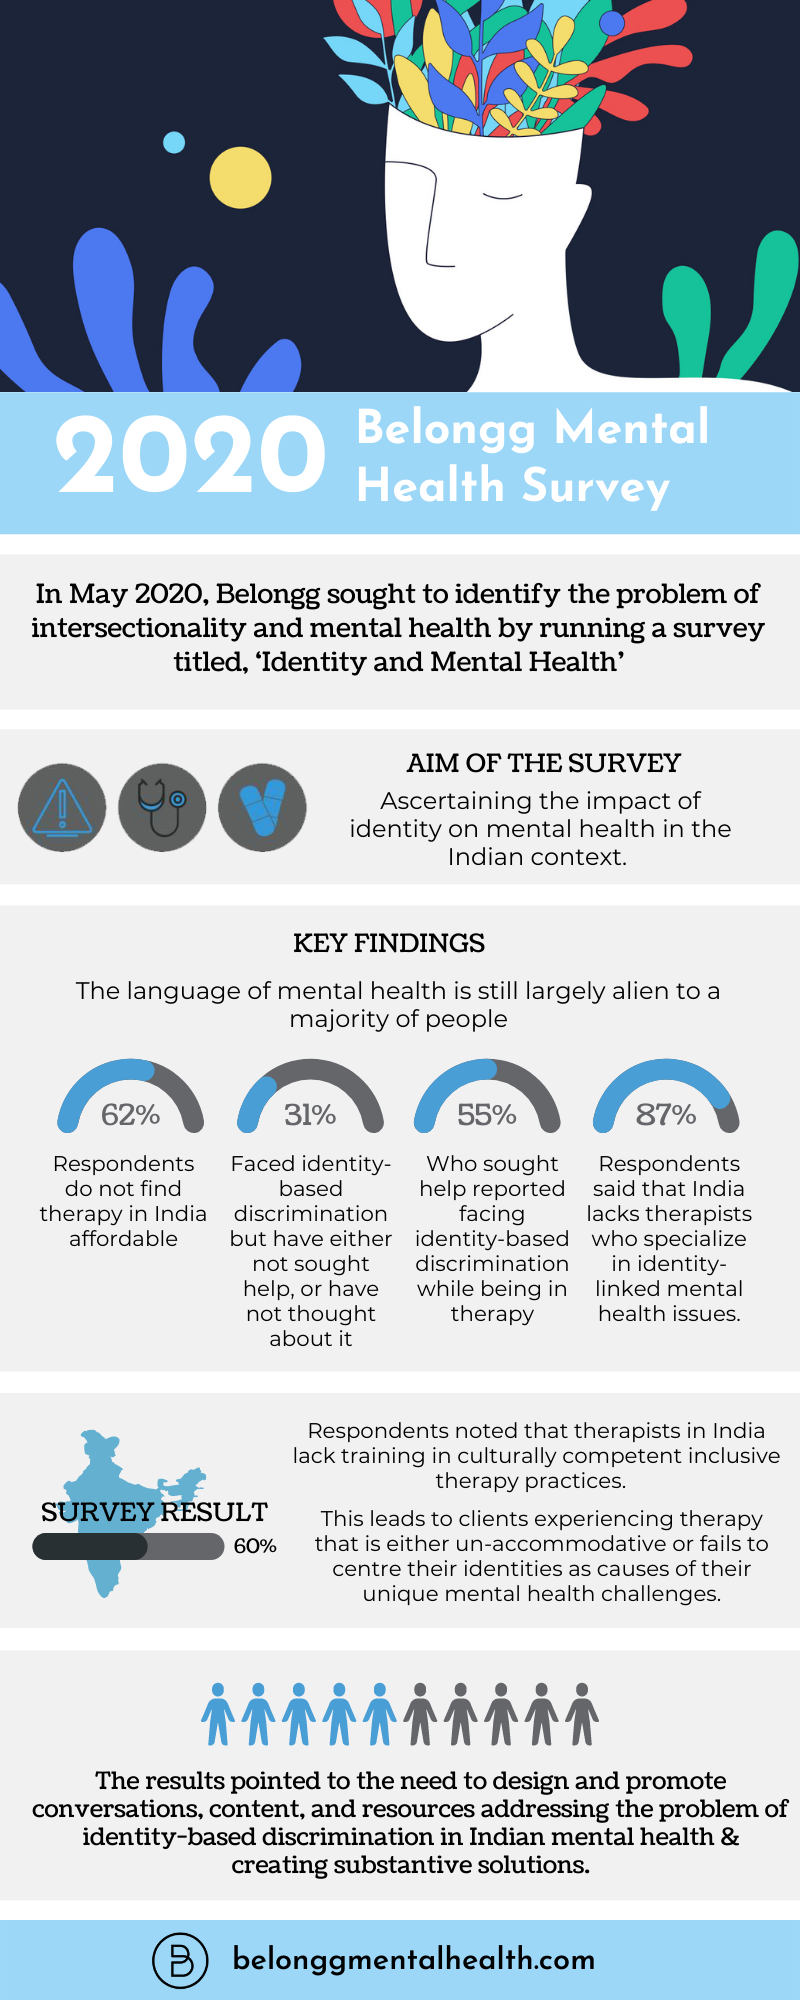 Belongg Mental Health Survey 2020 Findings